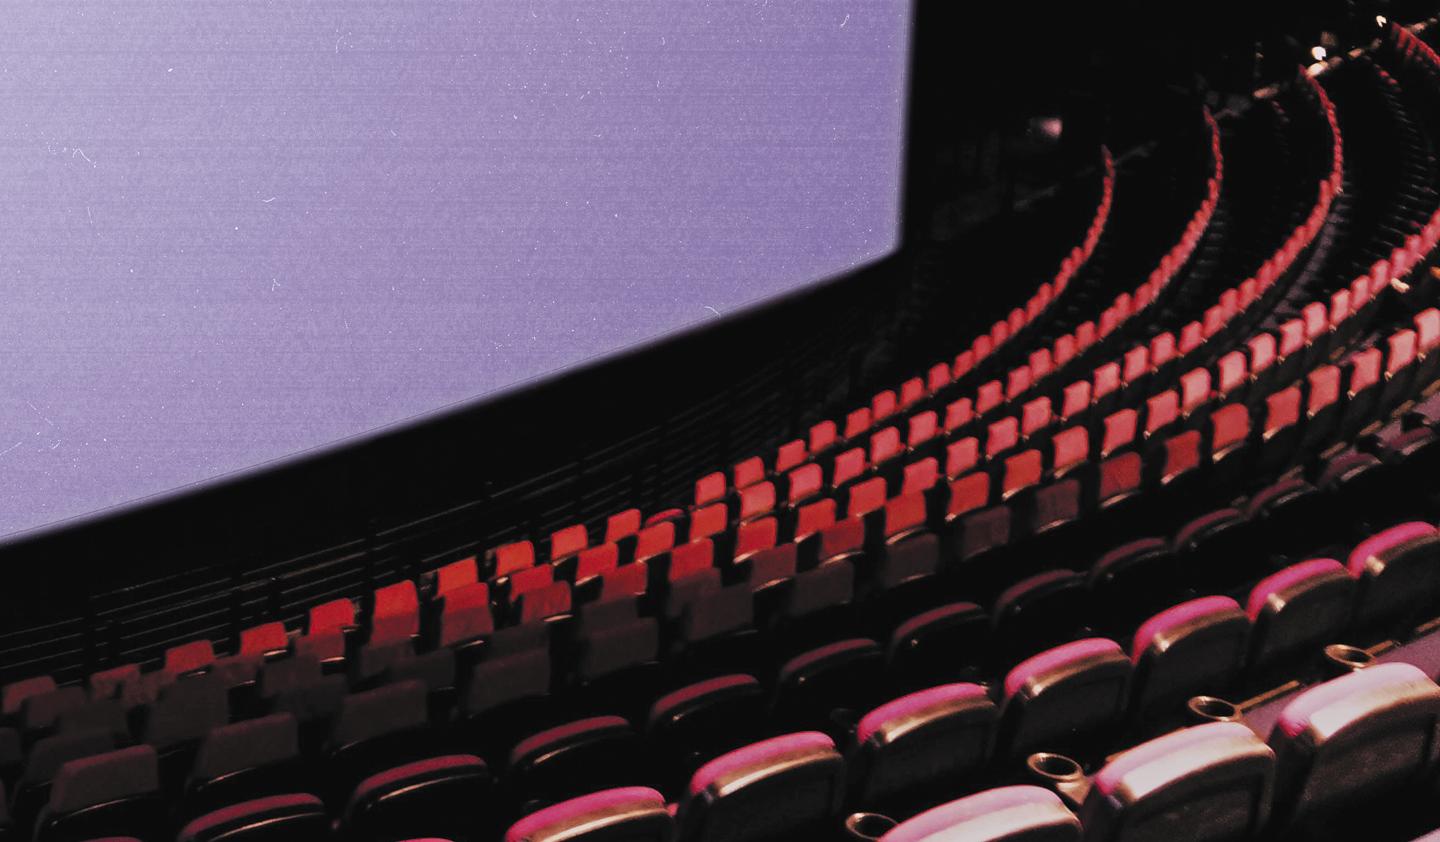 Cinema seating and screen